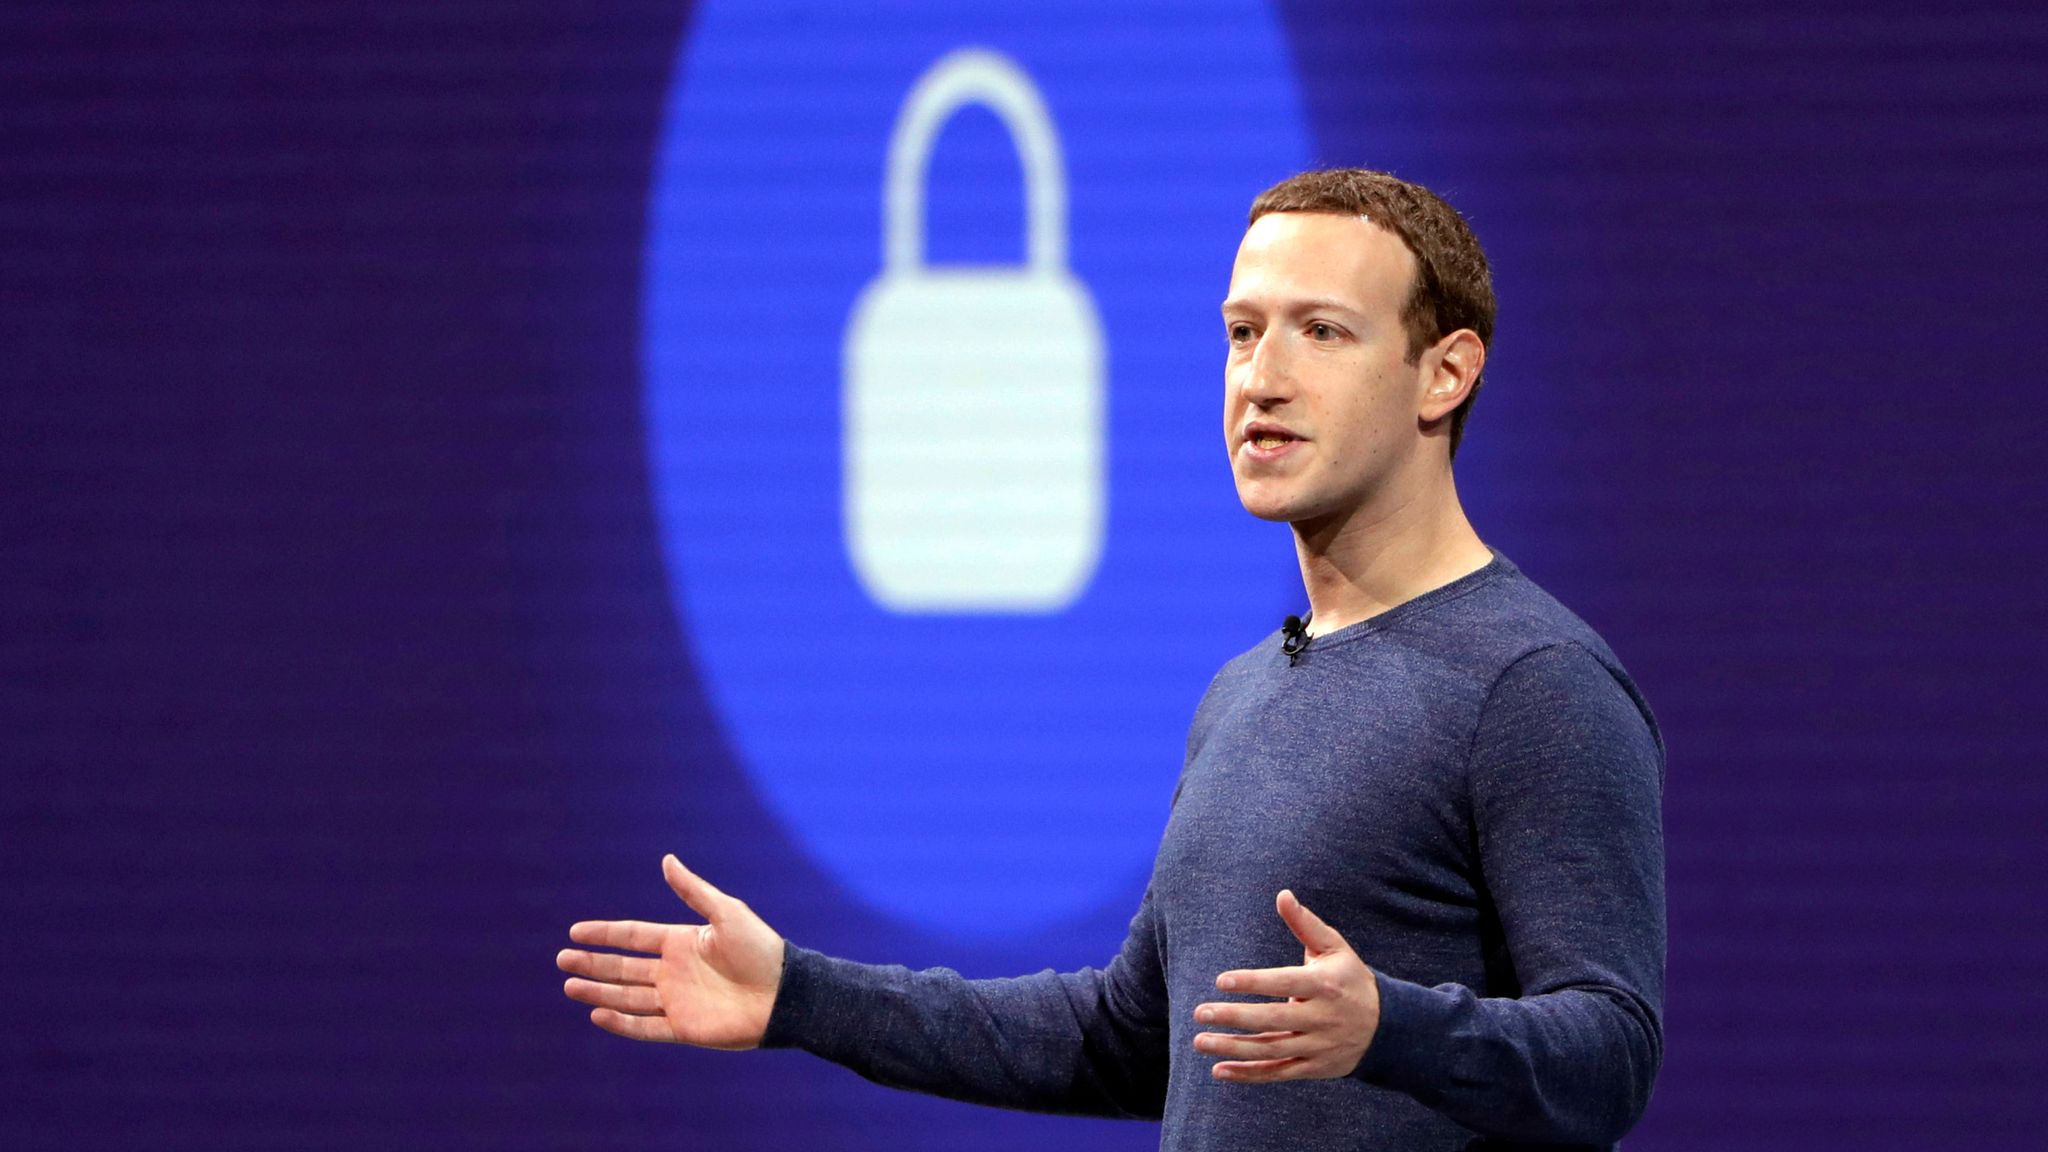 Major change to Facebook news feed to improve wellbeing Mark Zuckerberg